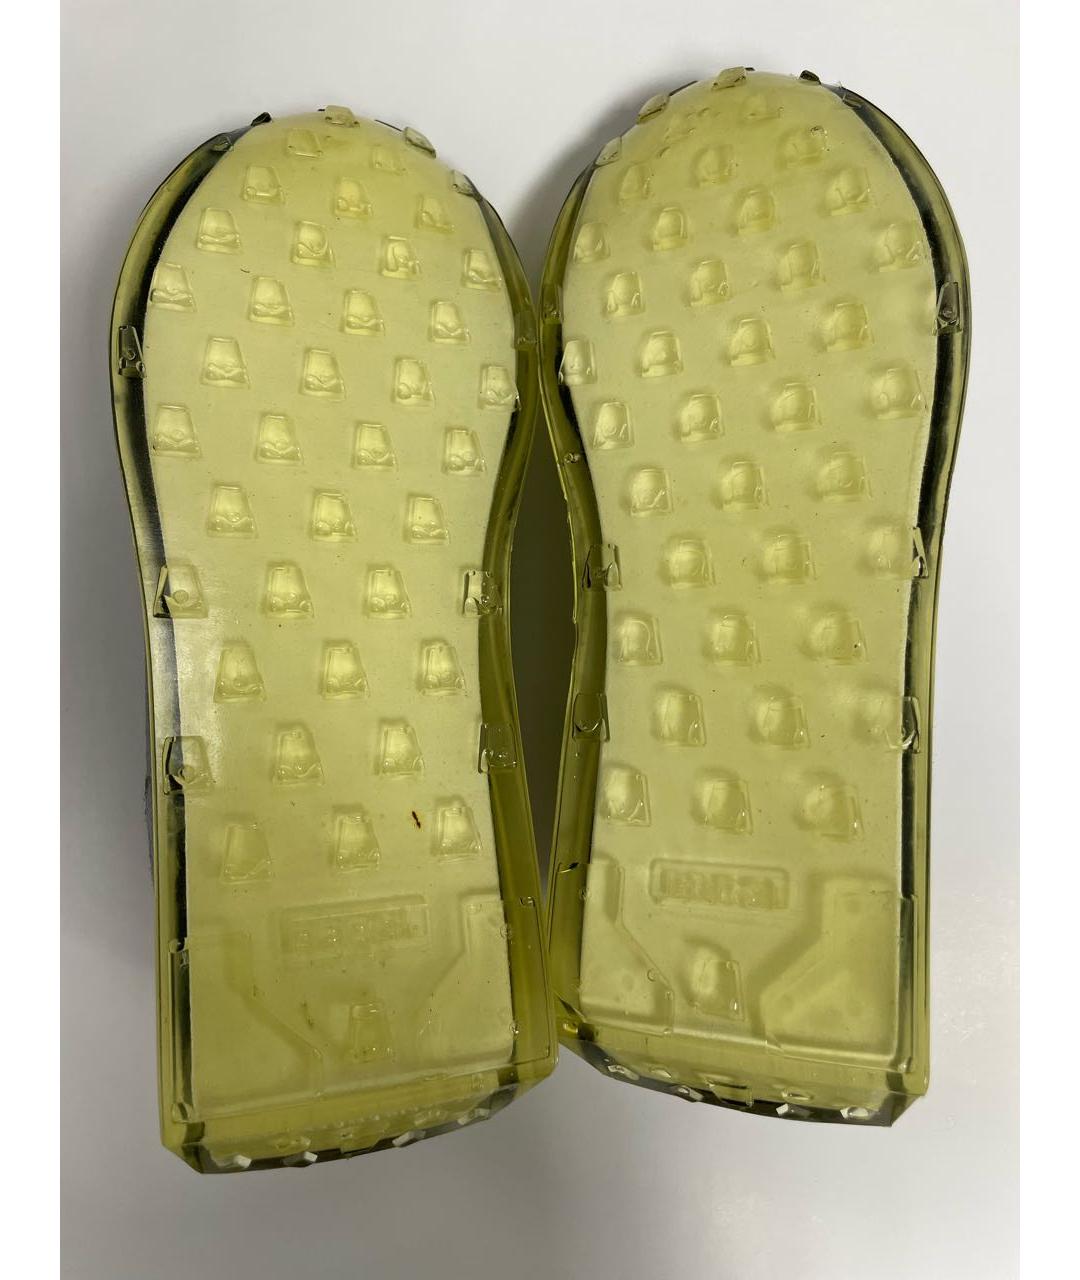 OXS RUBBER SOUL Антрацитовые замшевые низкие кроссовки / кеды, фото 6